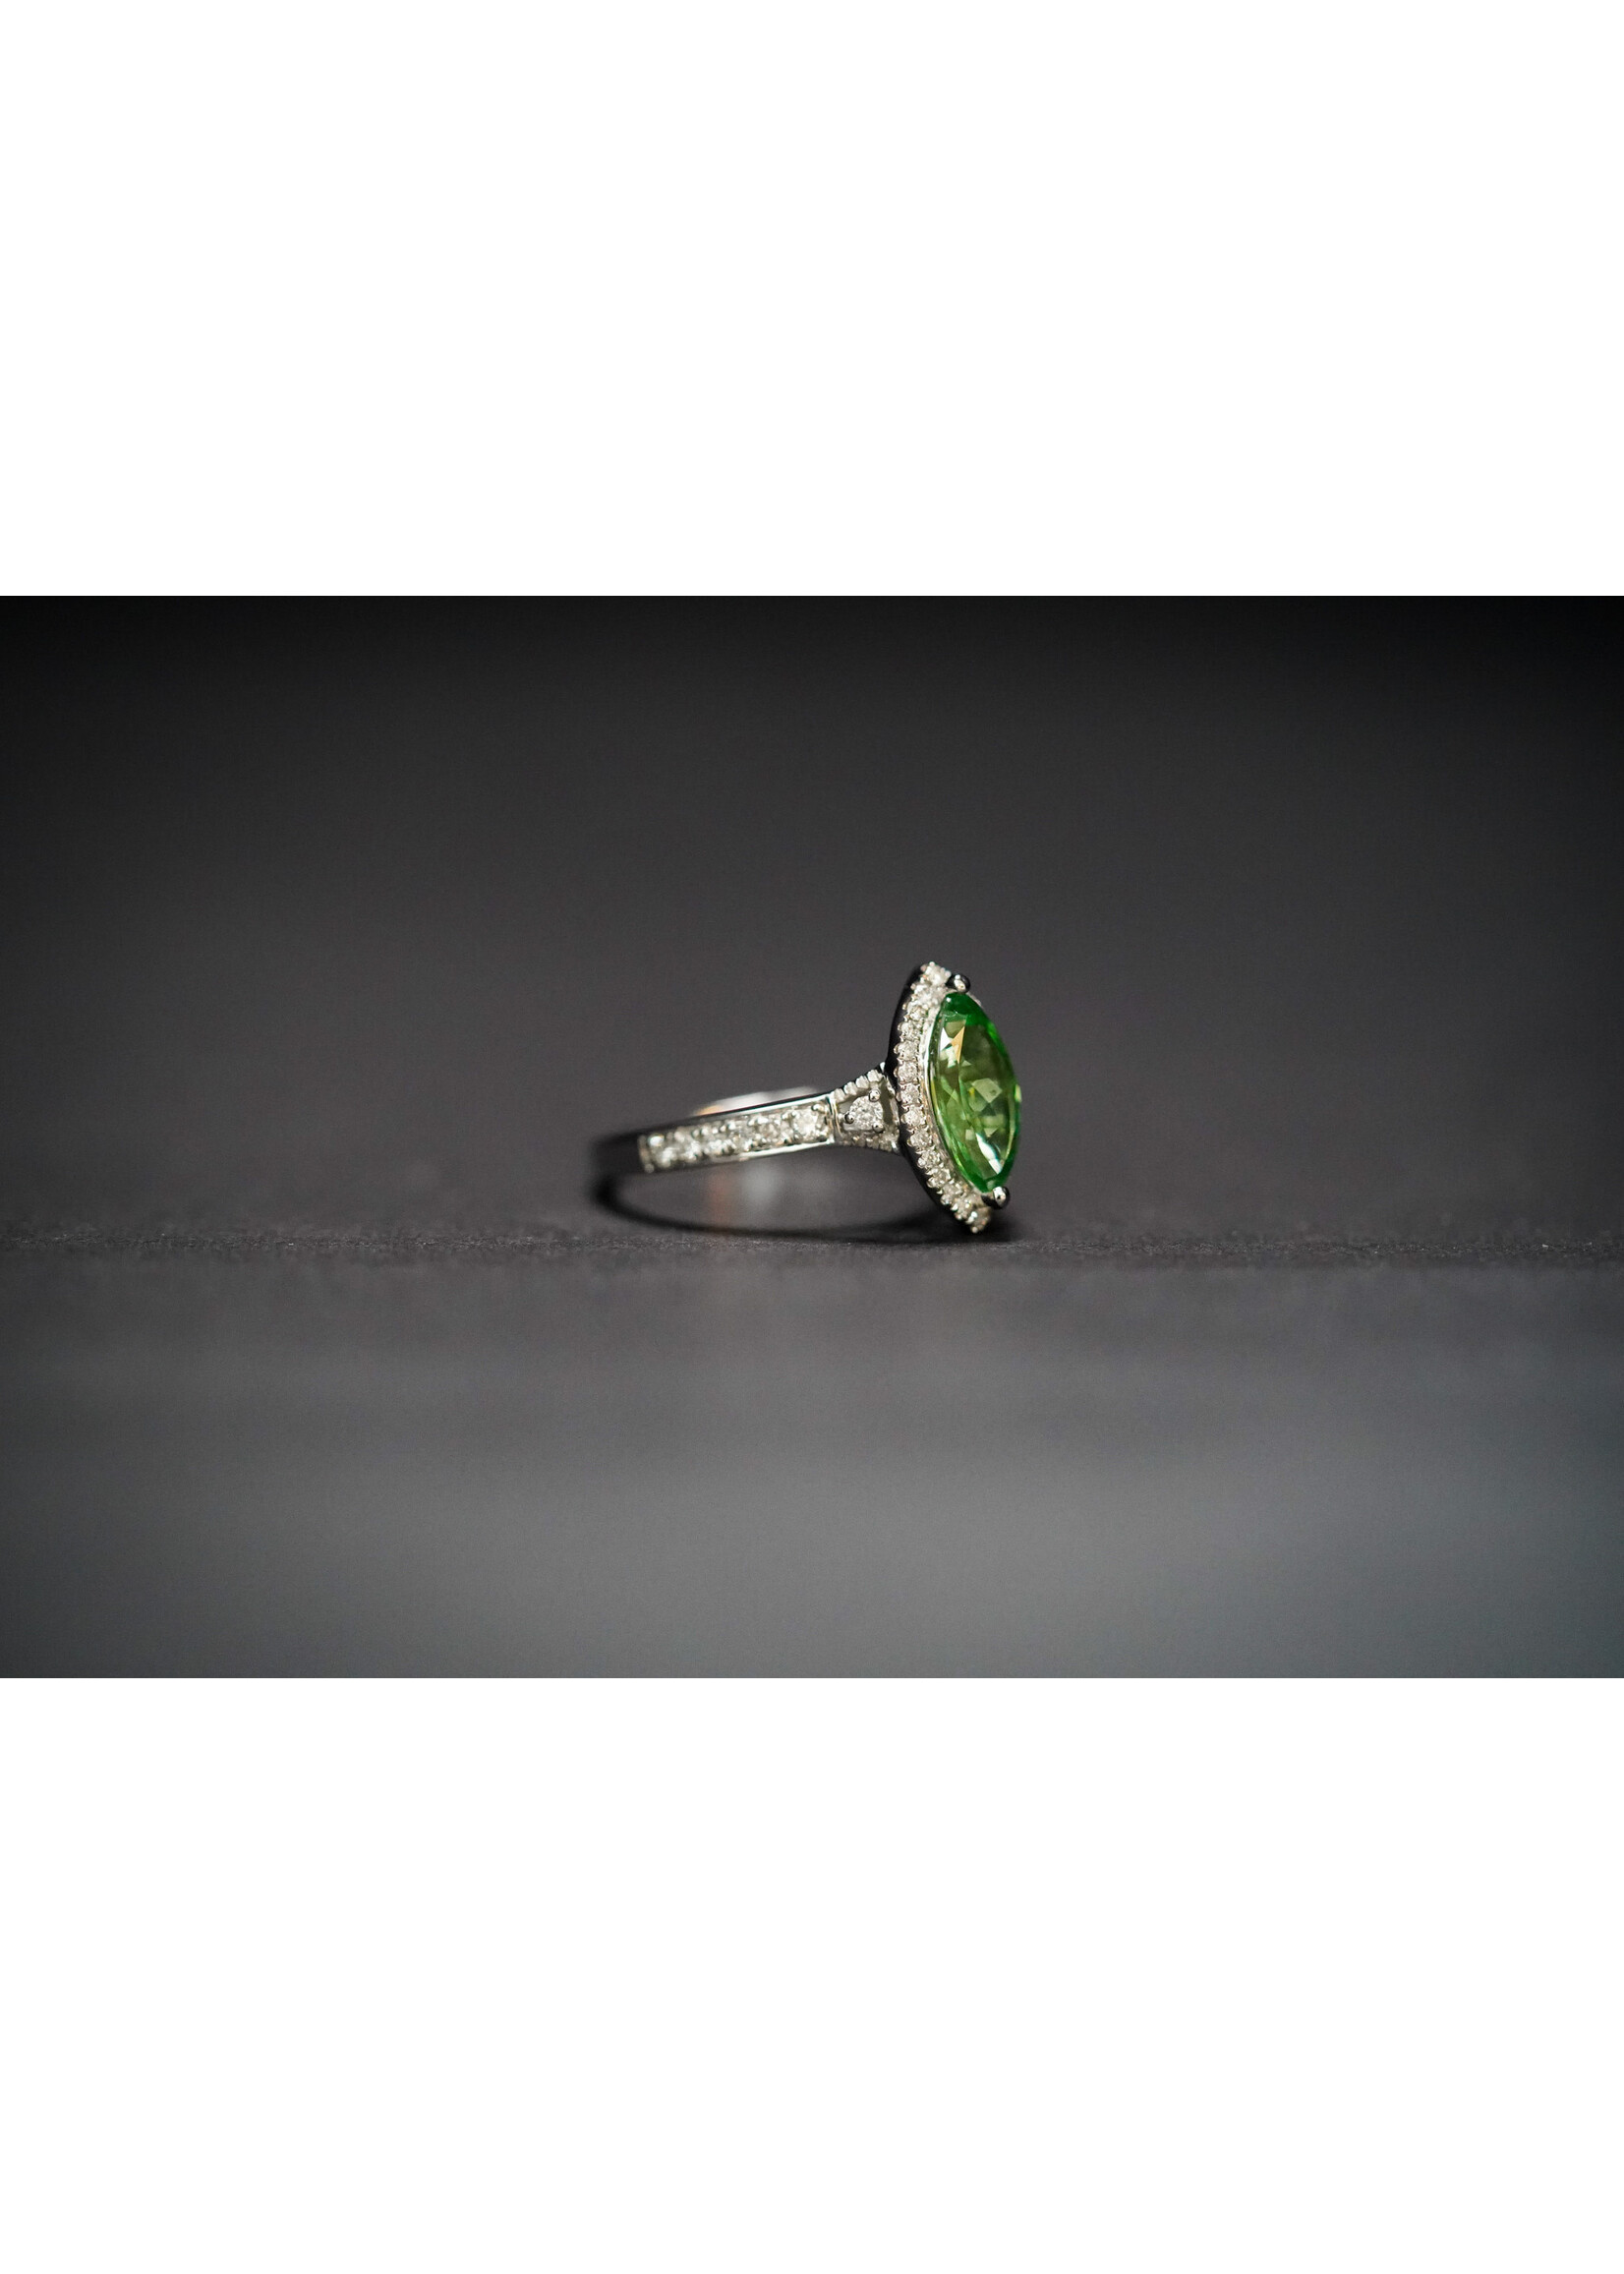 14KW 2.68g 1.71ctw (1.37ctr) Tsavorite Garnet & Diamond Fashion Ring (size 7)